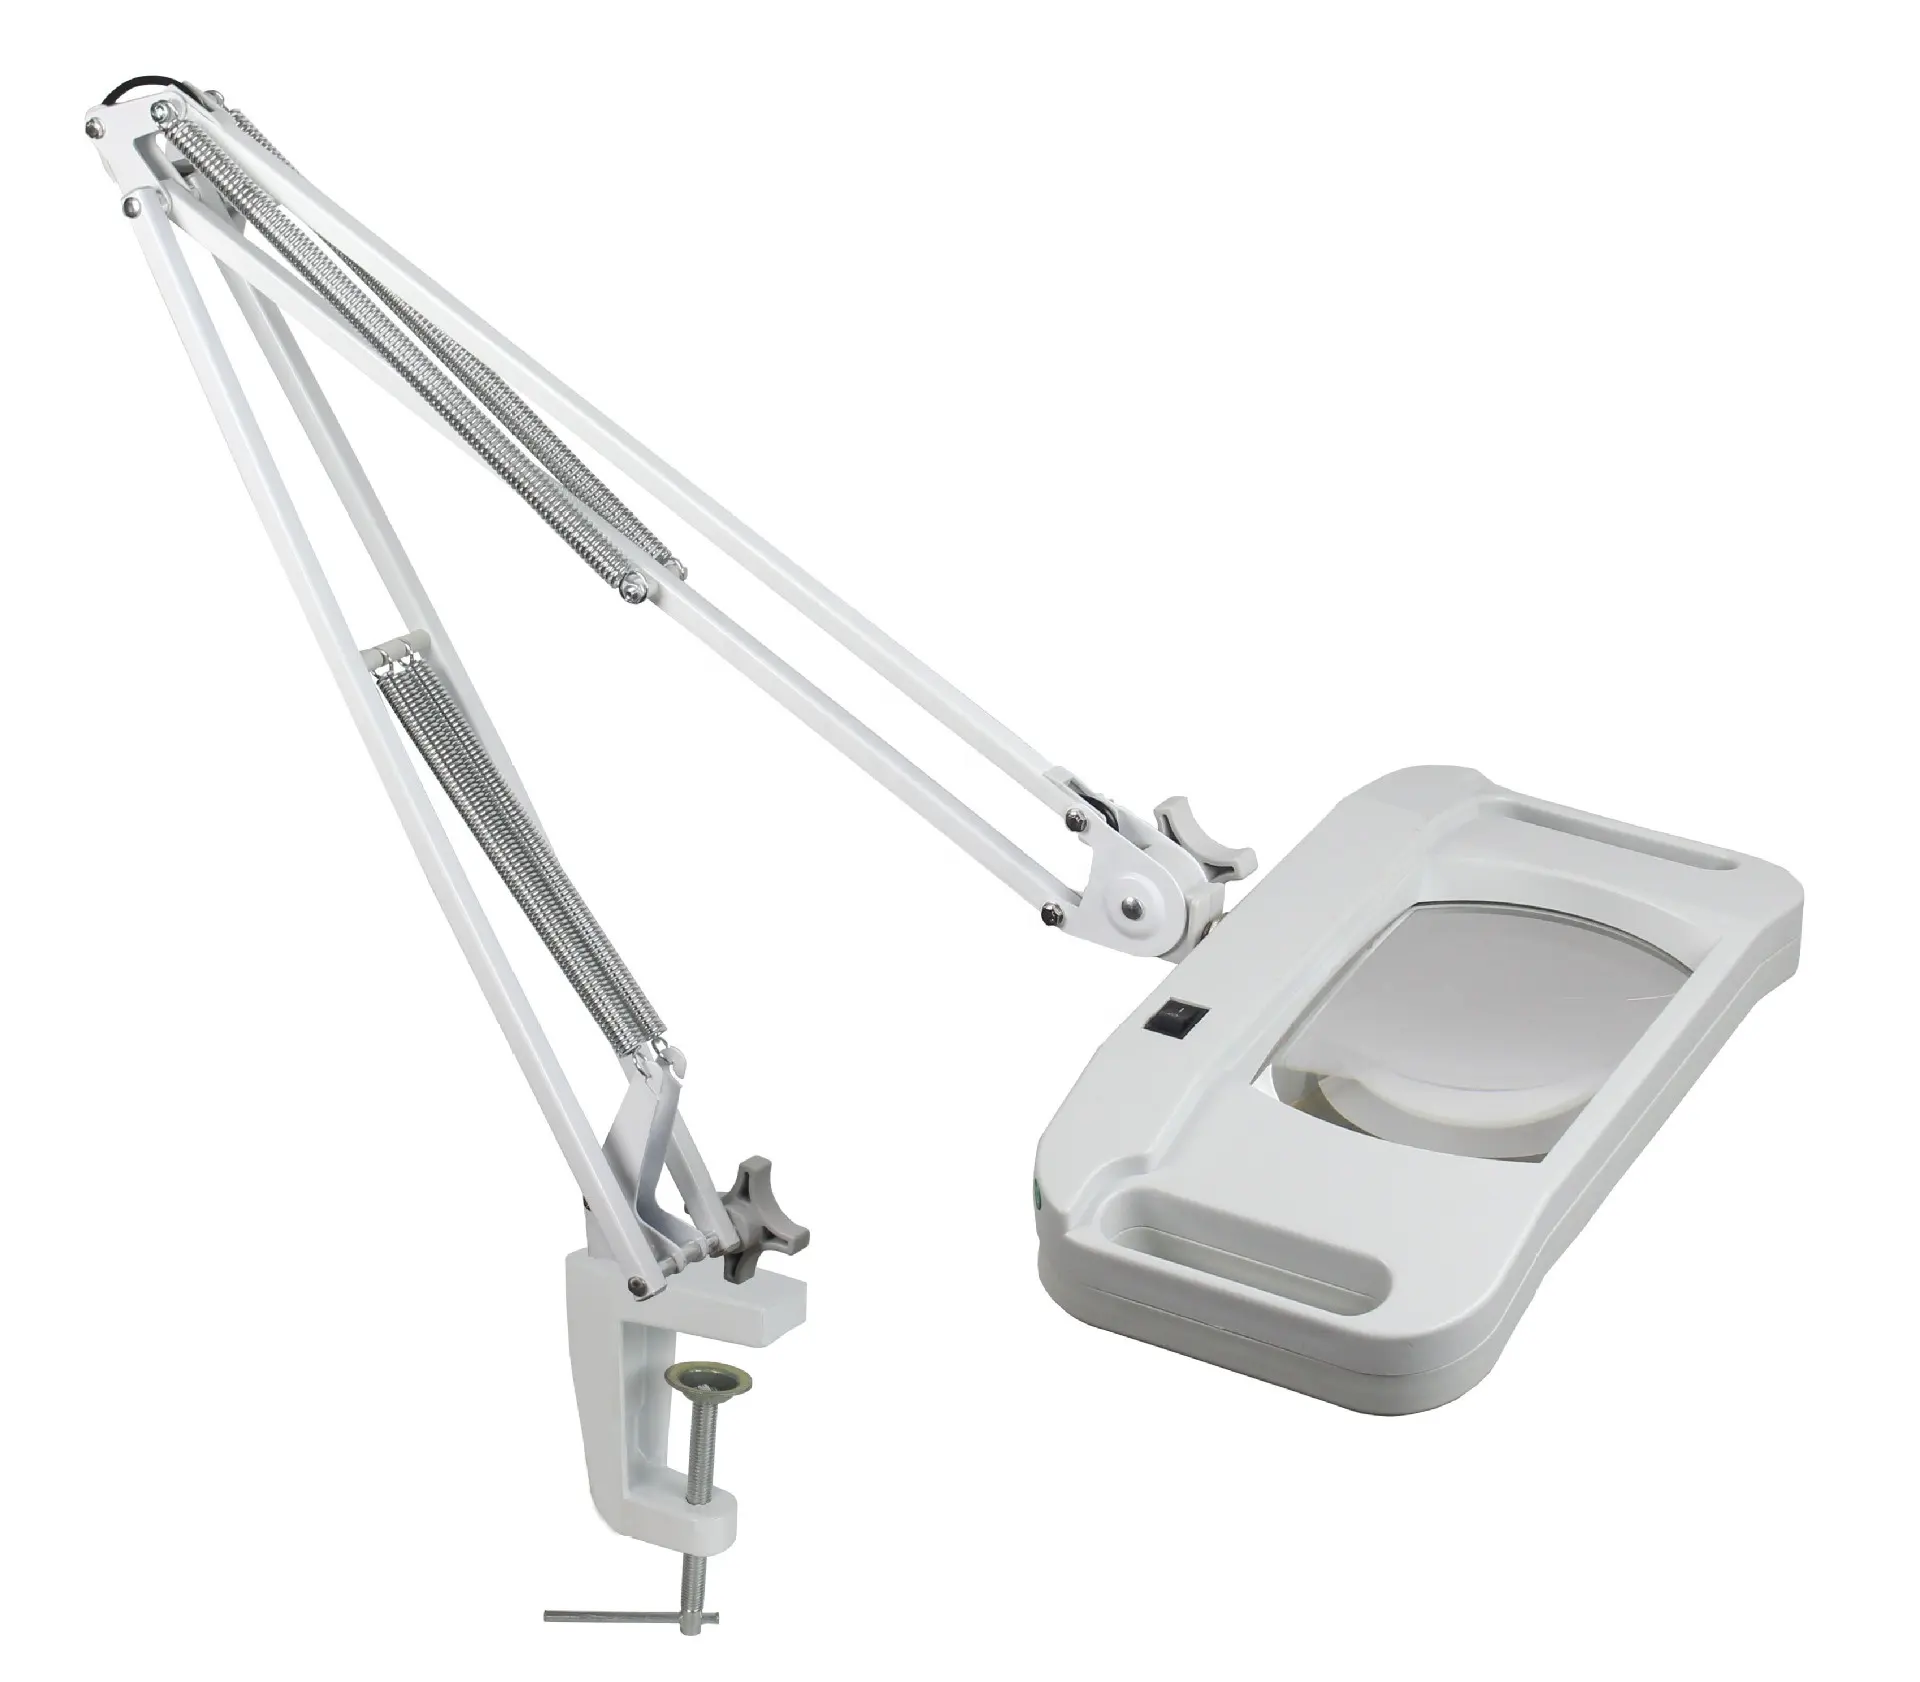 Square clip desktop lighting magnifying glass with lamp 10X86G desktop amplifier lamp